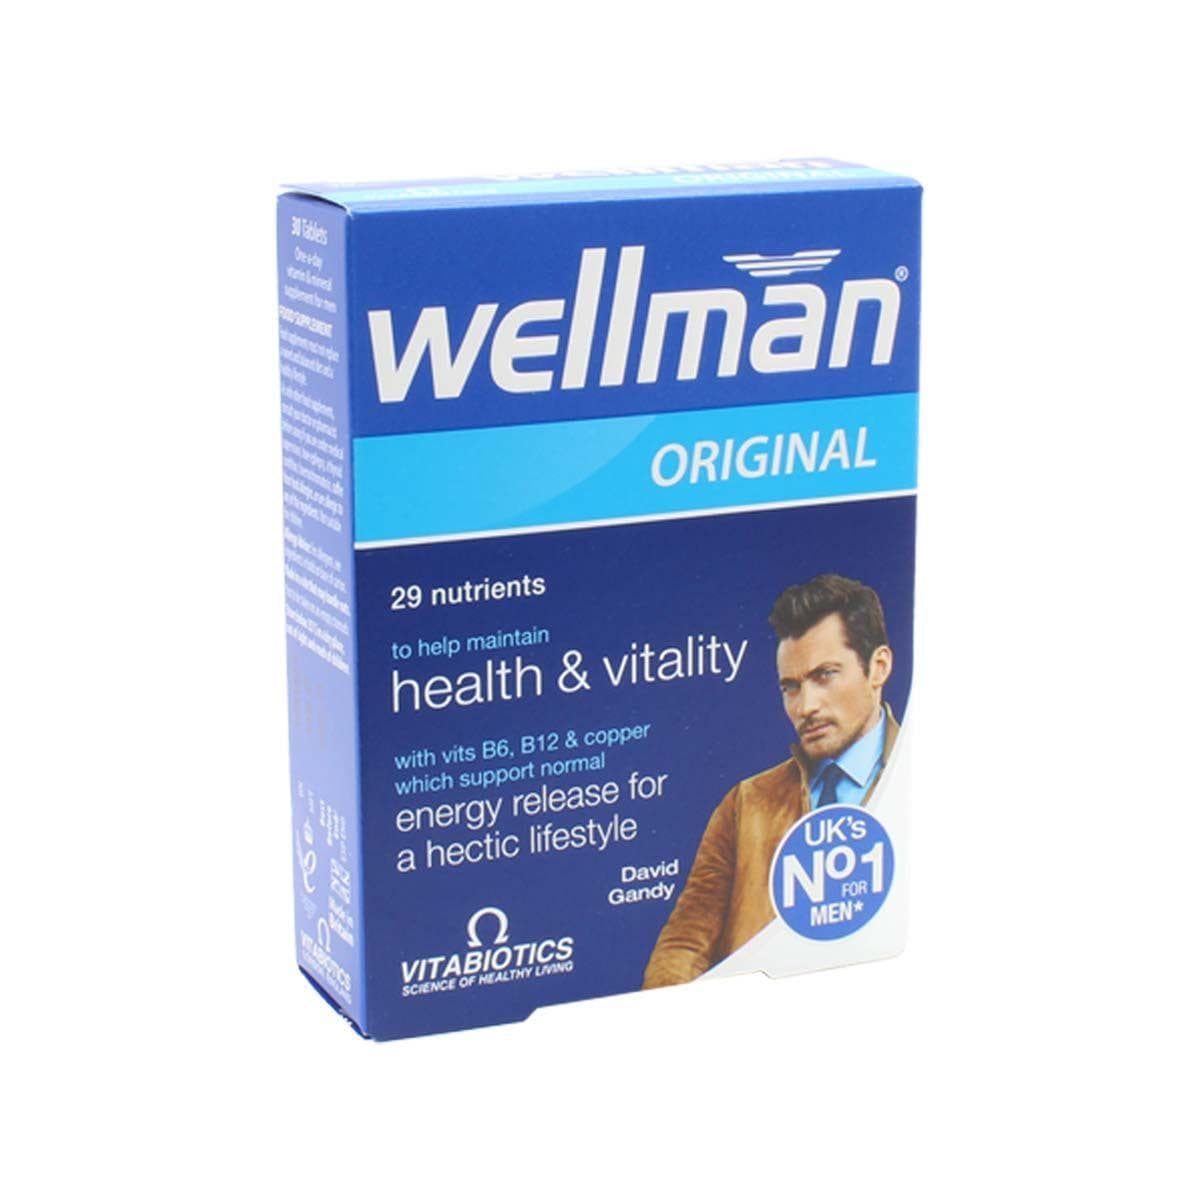 Wellman Original - welzo